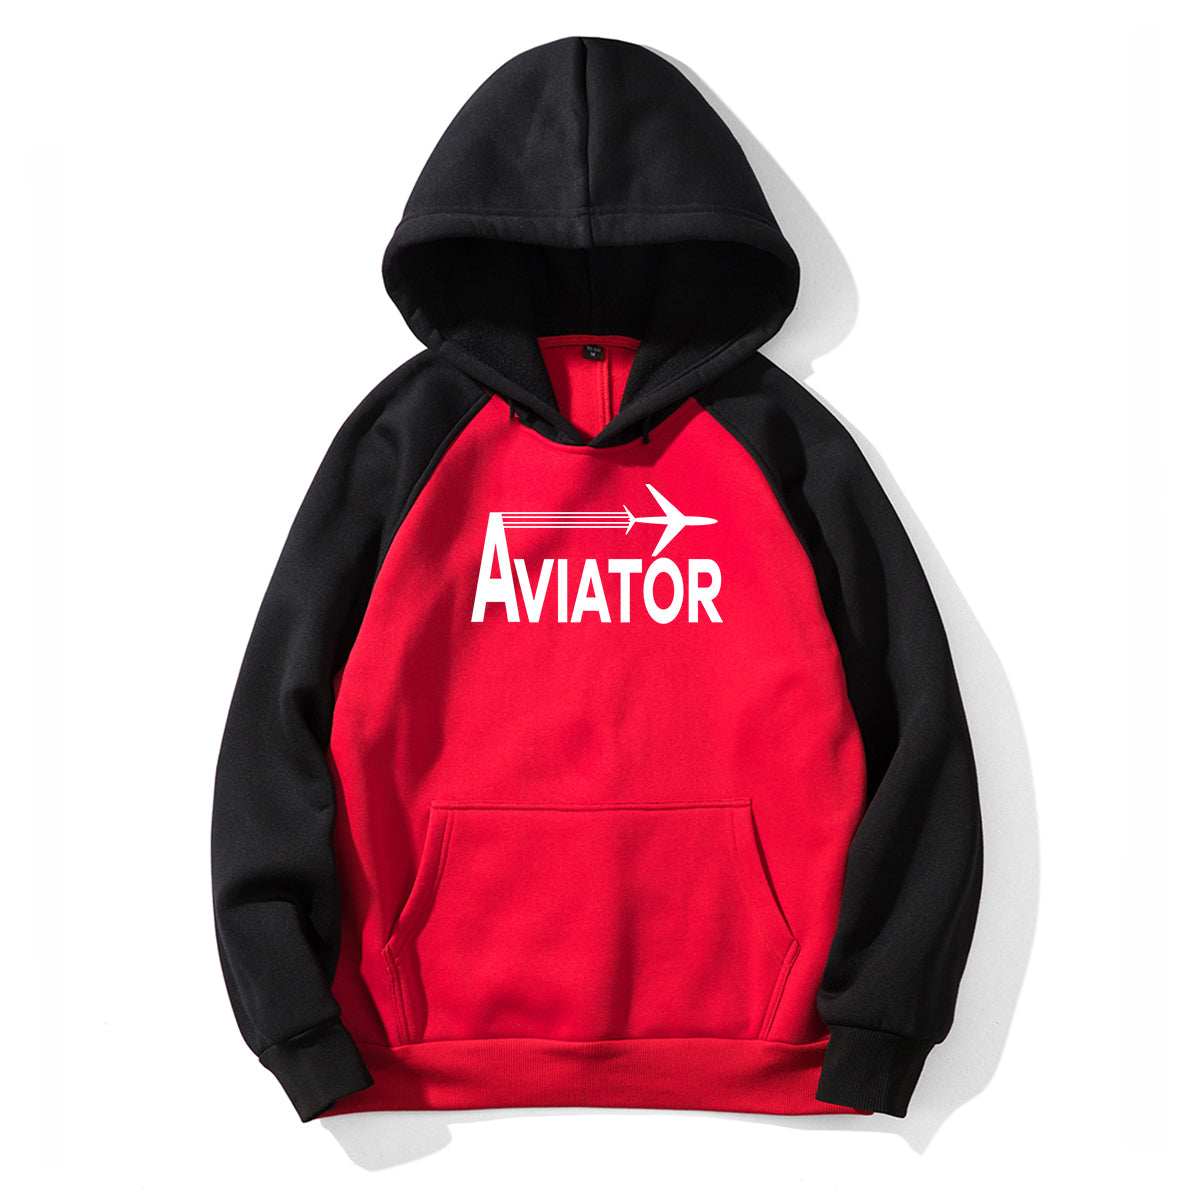 Aviator Designed Colourful Hoodies